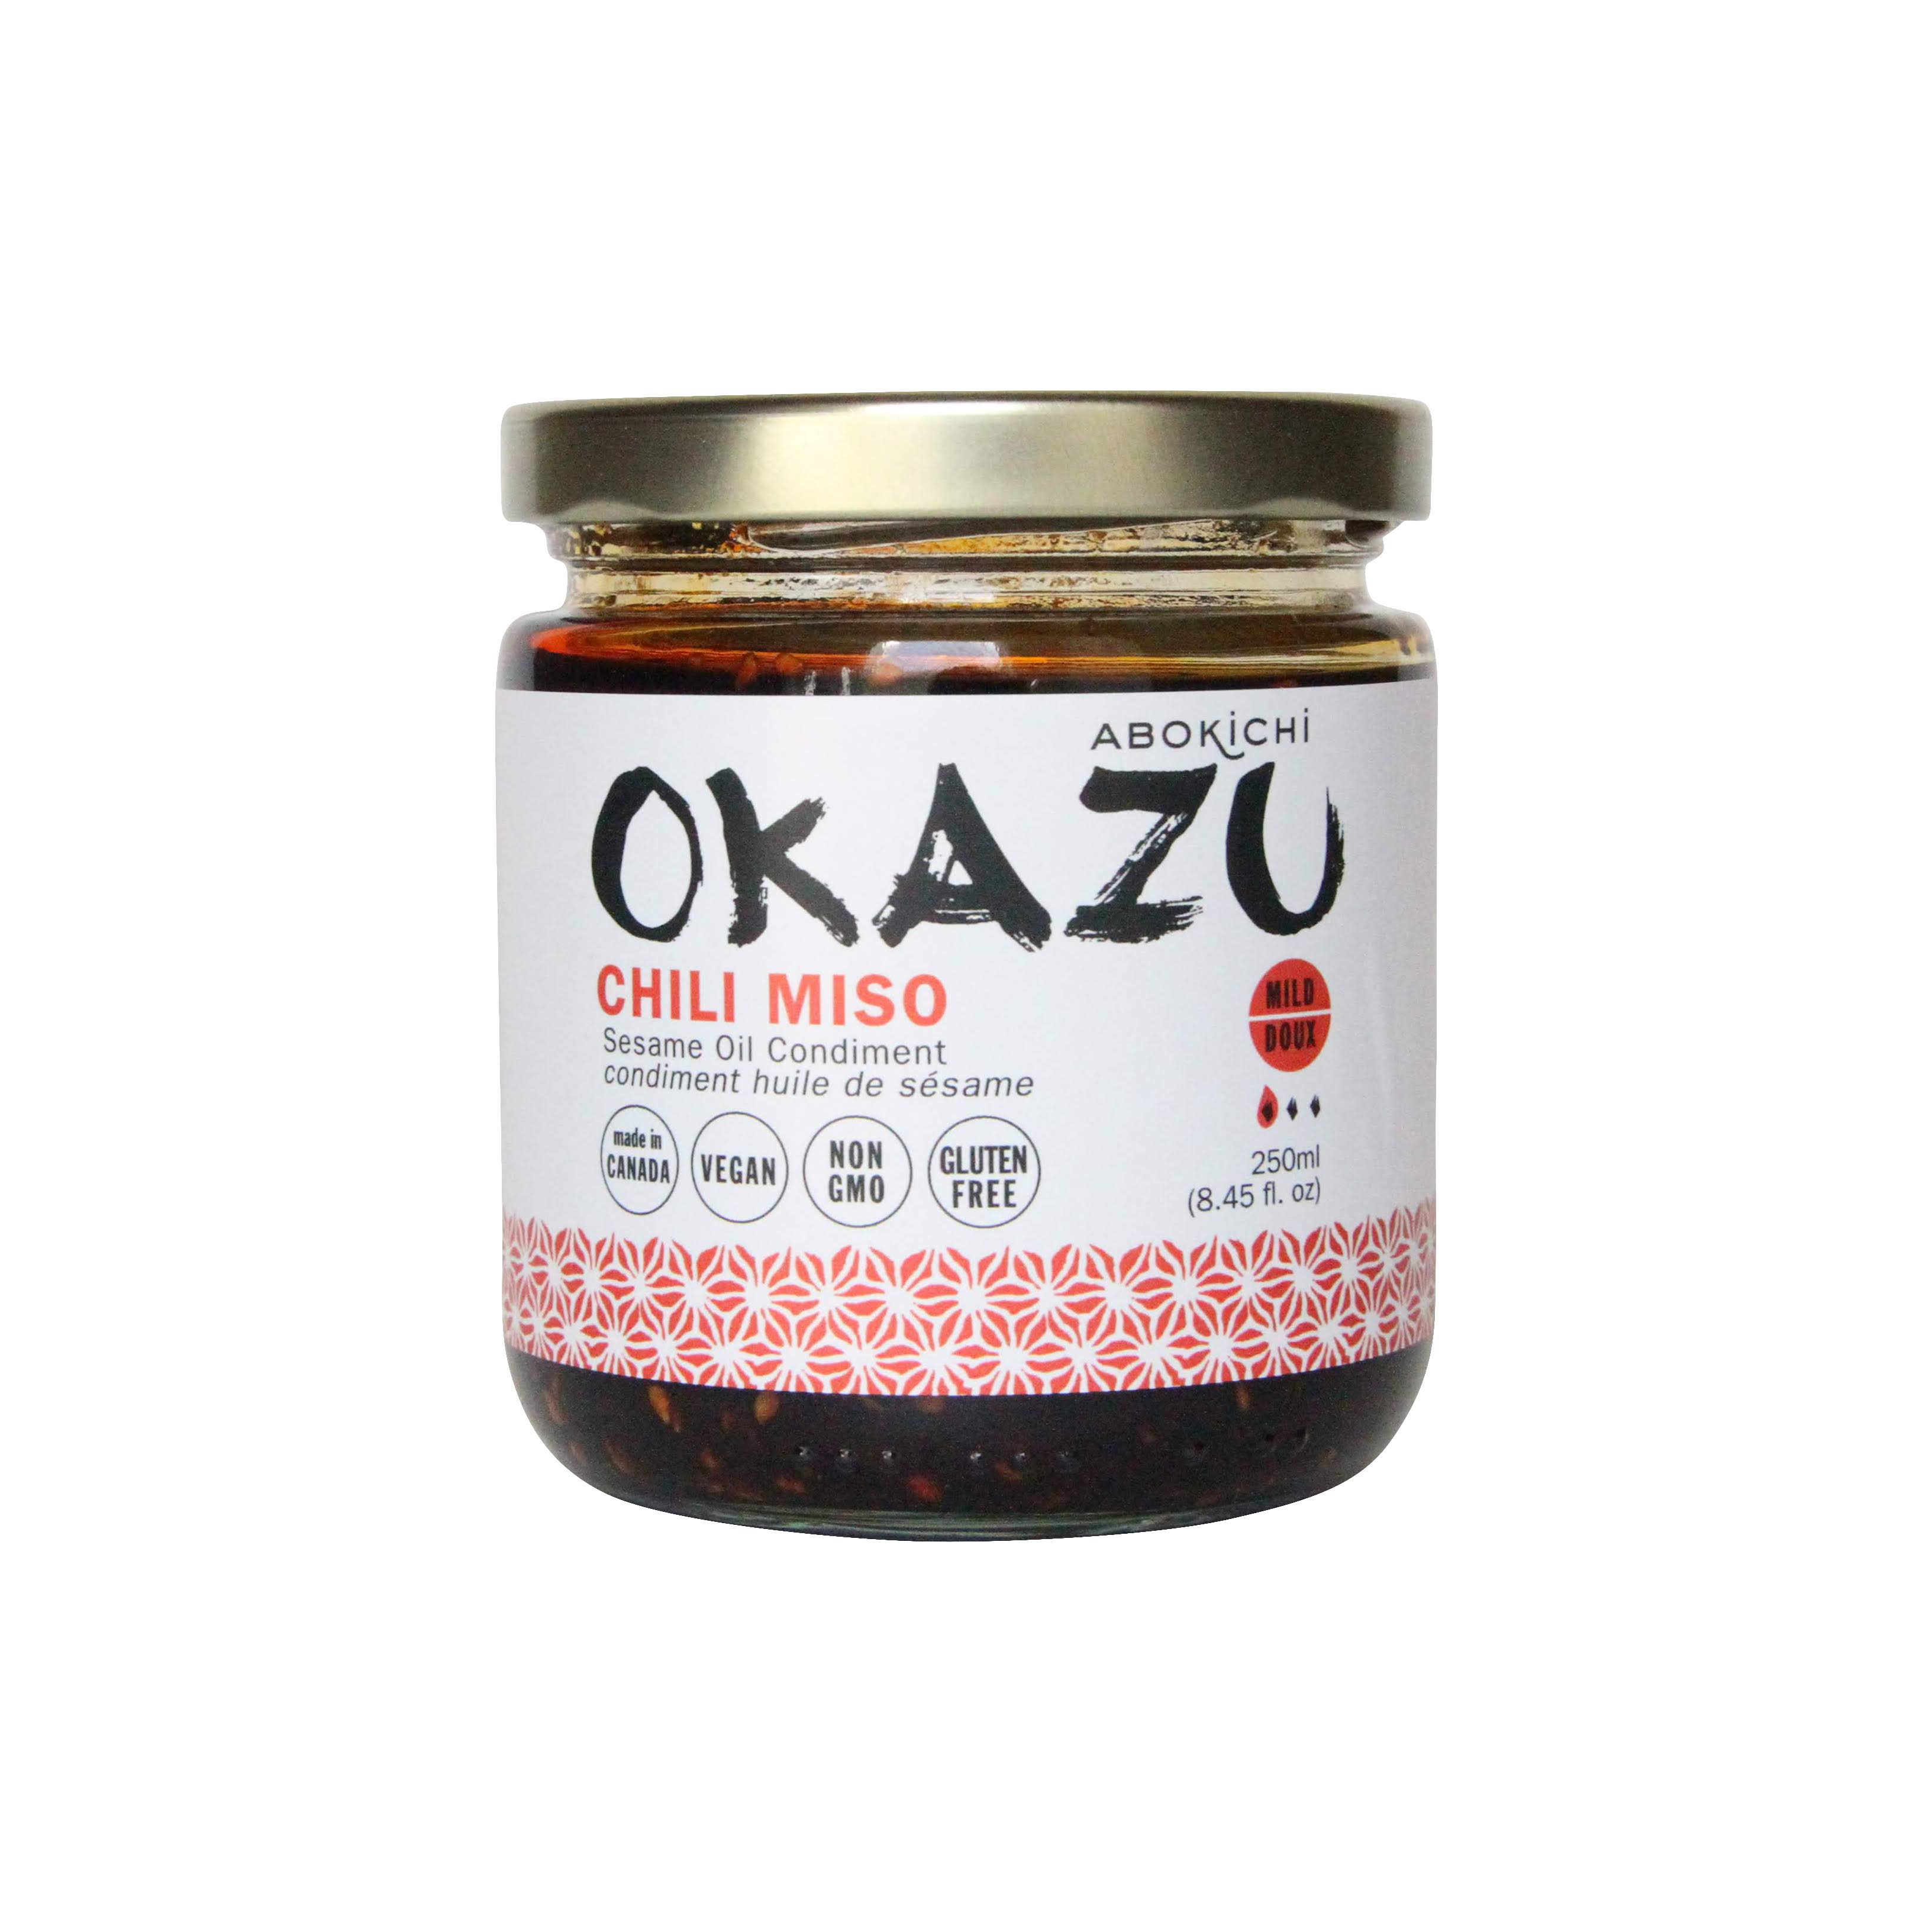 Abokichi Okazu Japanese Miso Chili Oil Mild